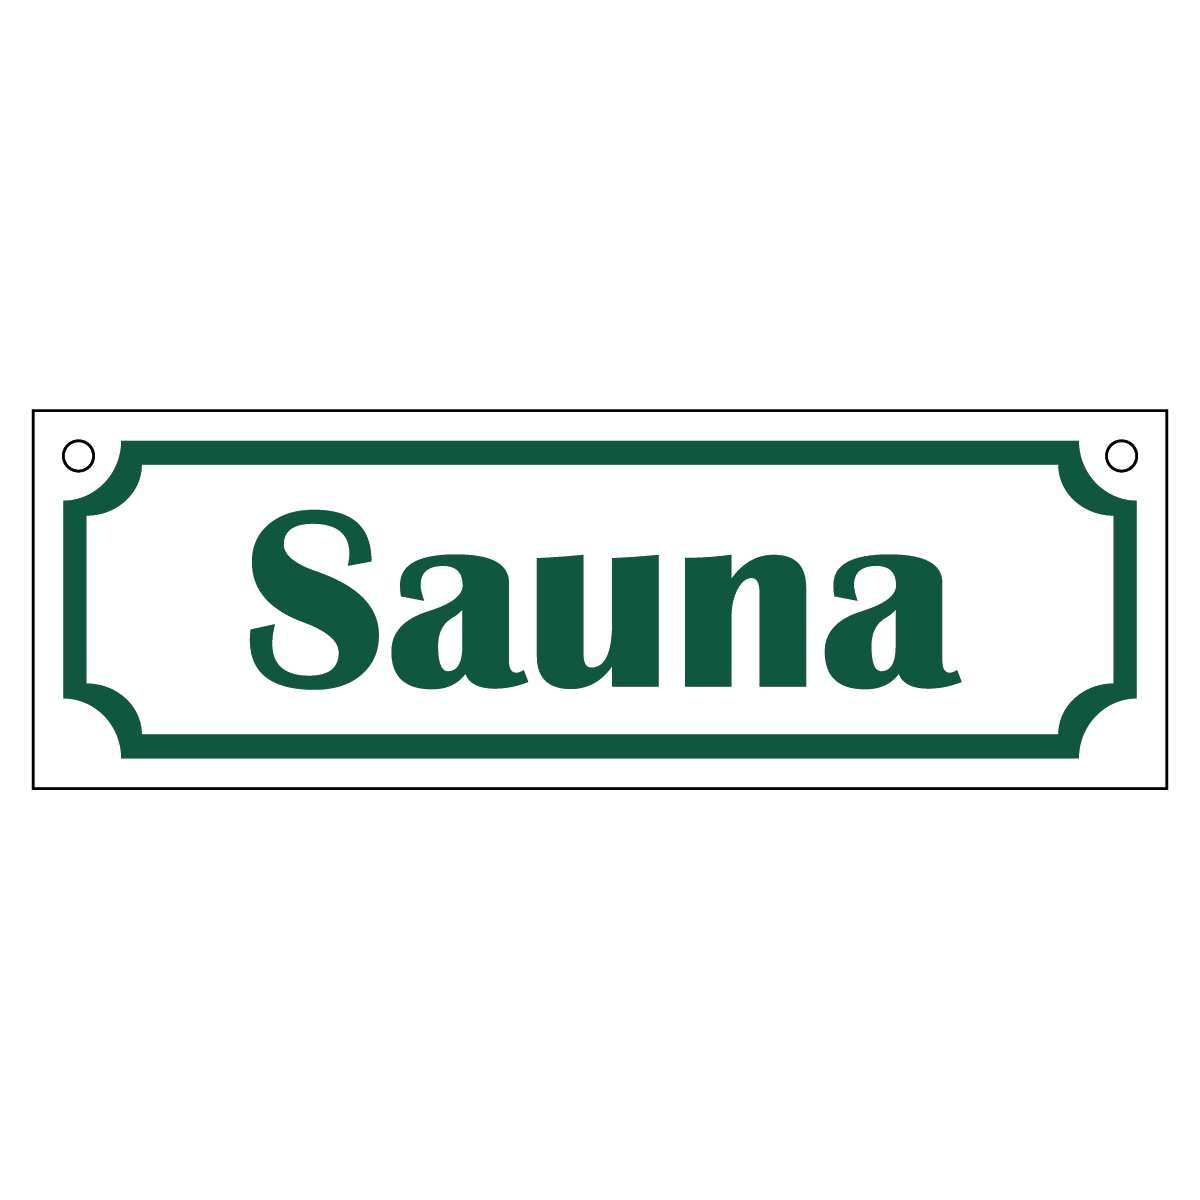 Sauna - Skylt - 150x50mm - Vit - Grön